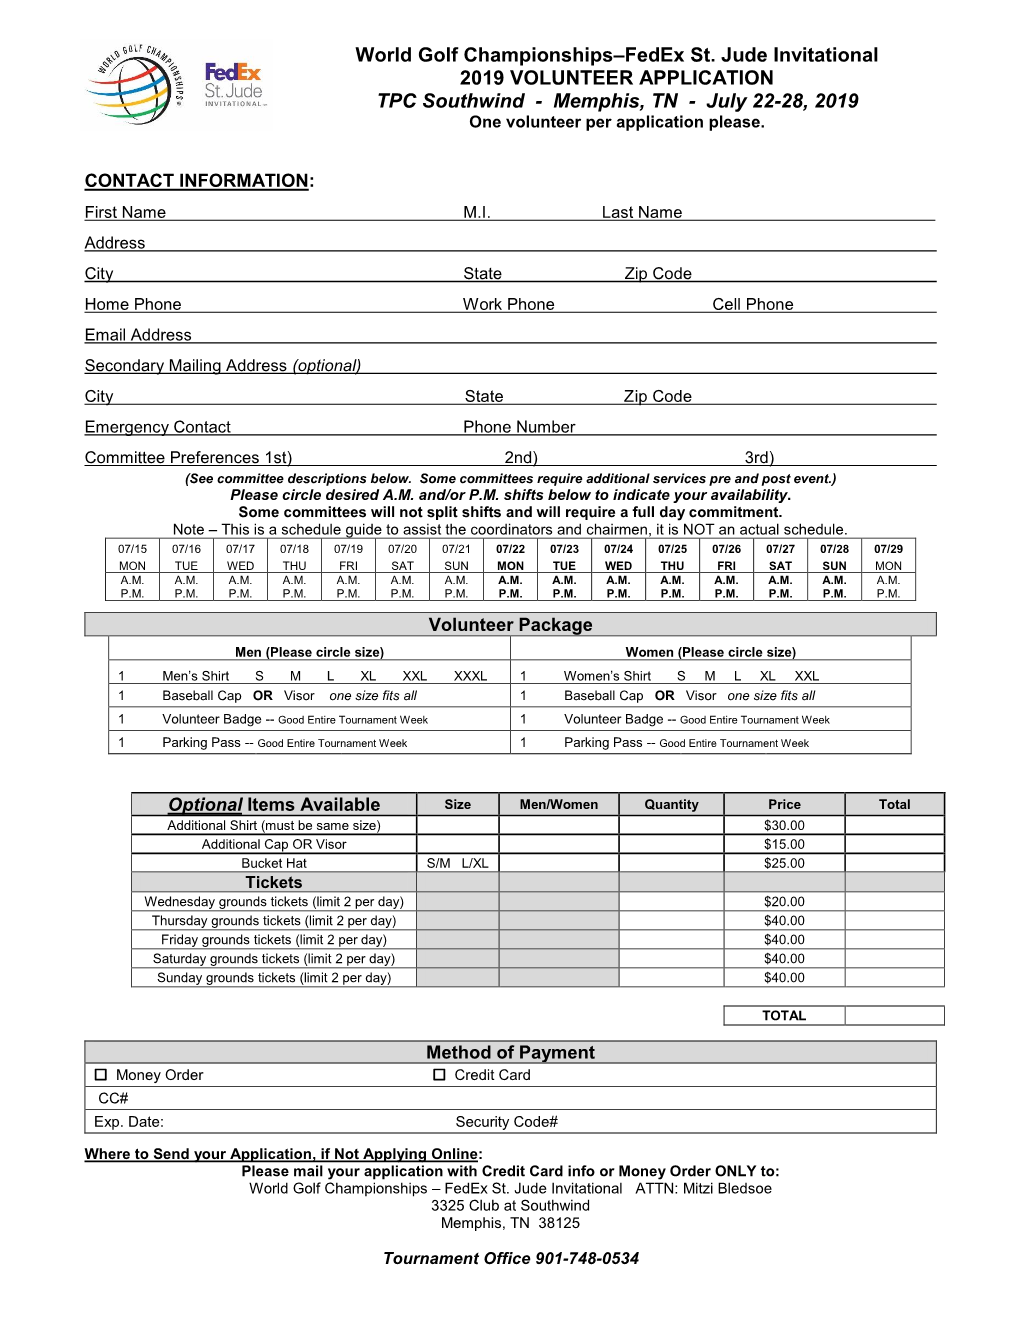 World Golf Championships–Fedex St. Jude Invitational 2019 VOLUNTEER APPLICATION TPC Southwind - Memphis, TN - July 22-28, 2019 One Volunteer Per Application Please